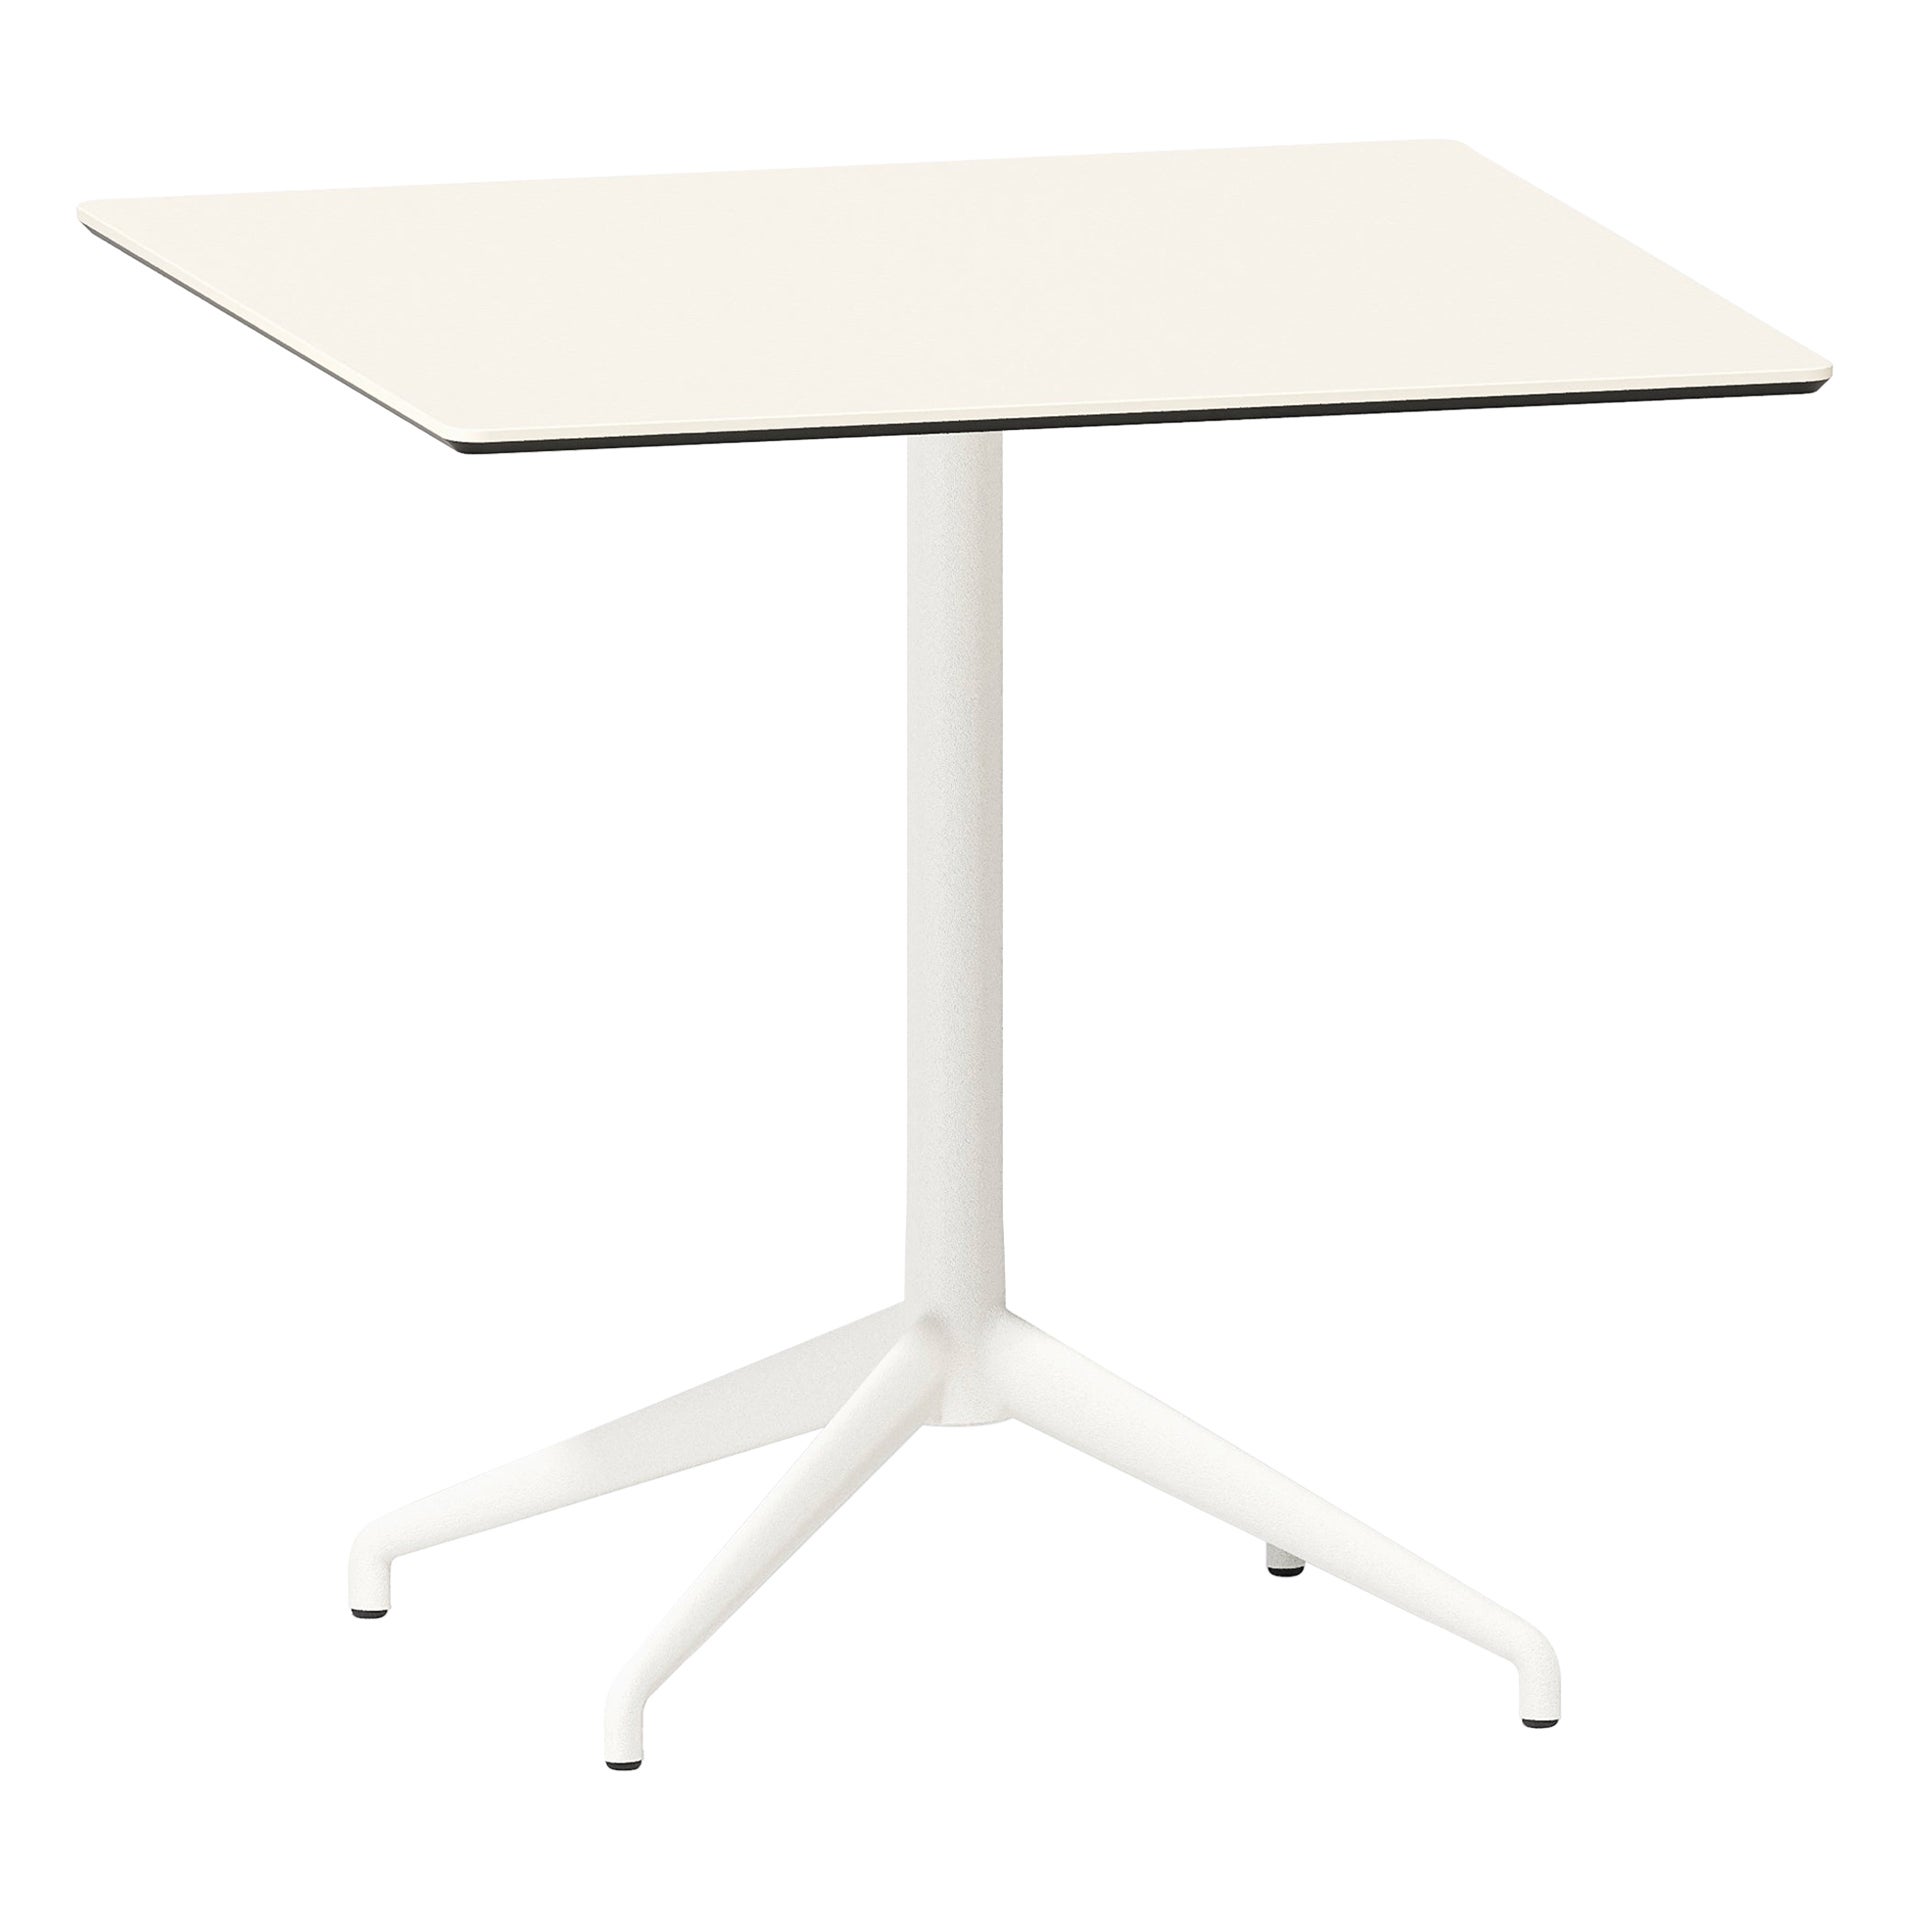 Alis Square Table, Aluminium Base and Ceramic Top, by Discipline Lab For Sale